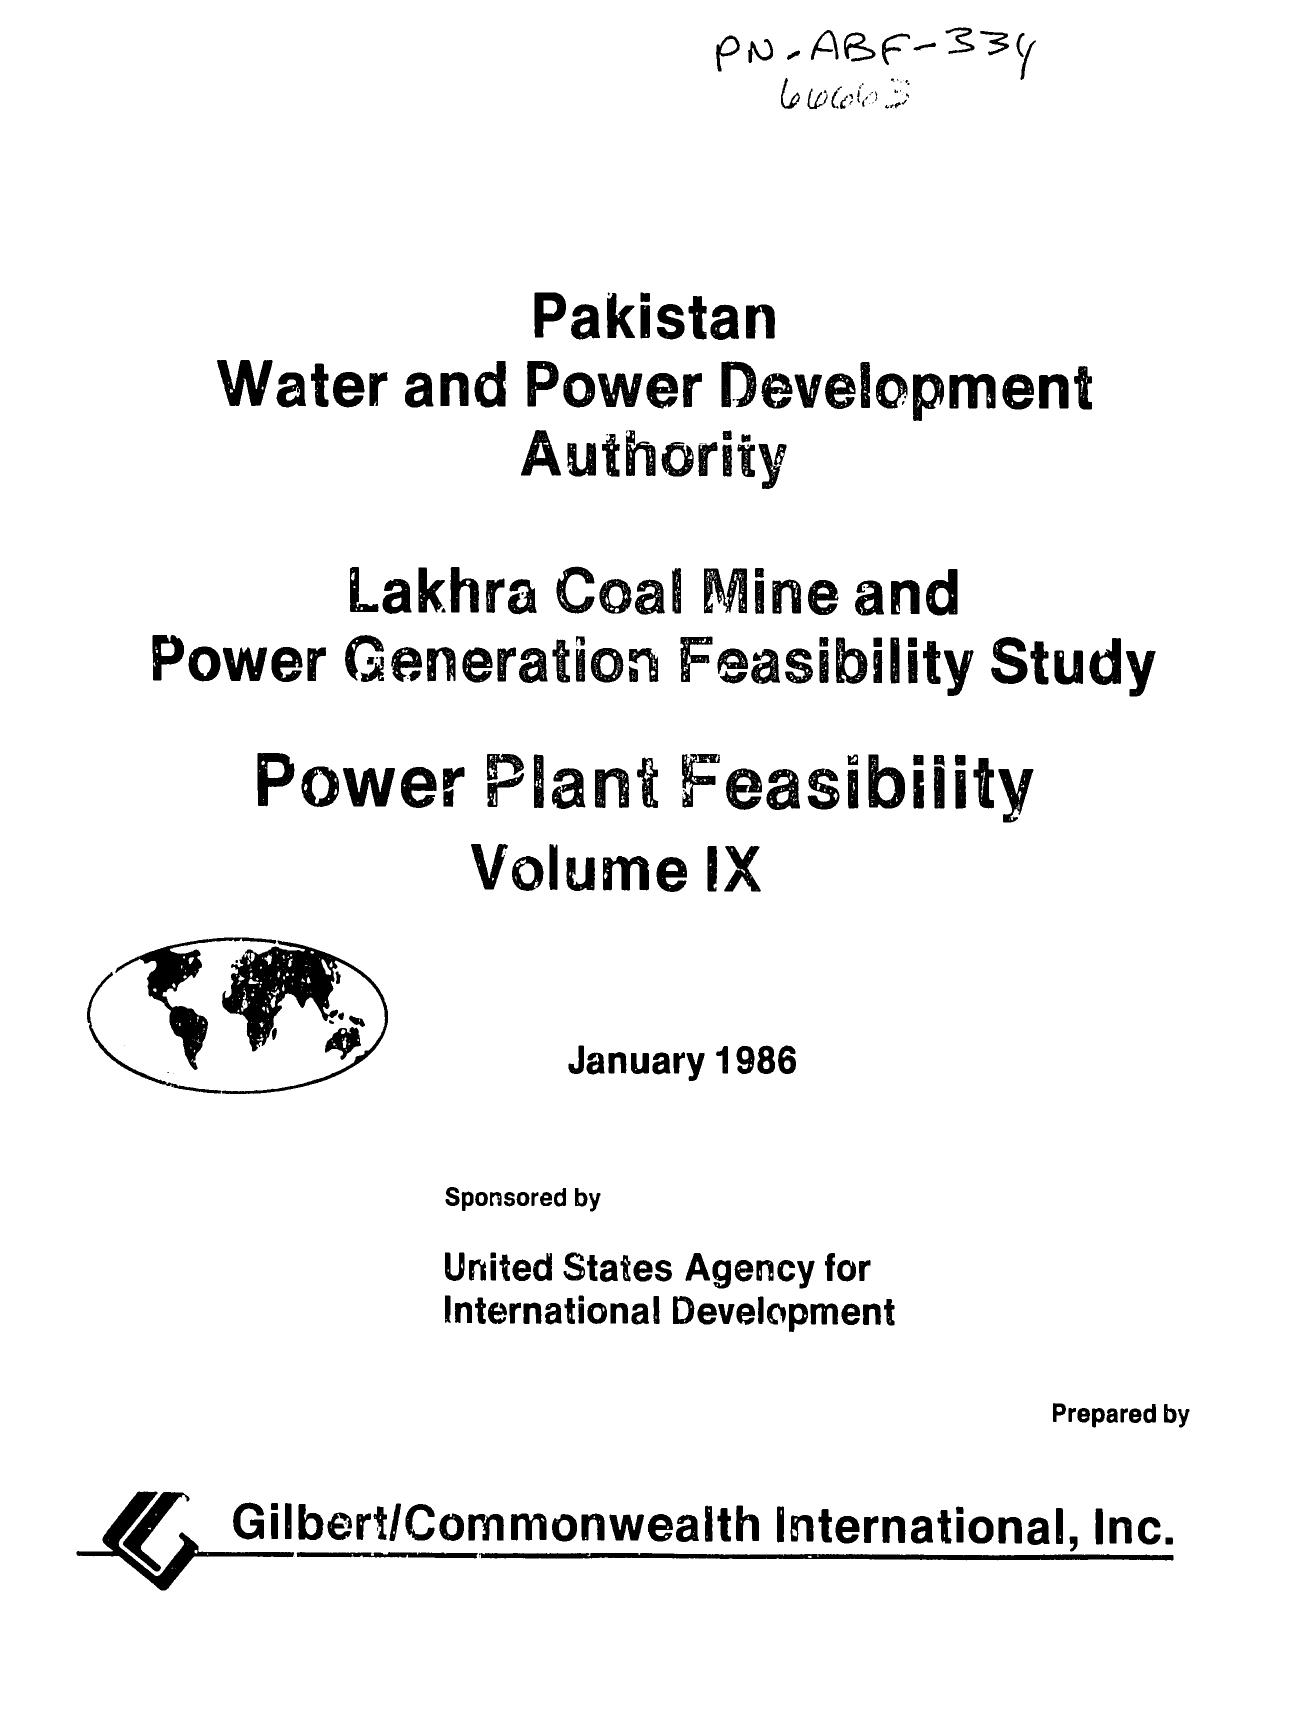 Pakistan Water Development 1986